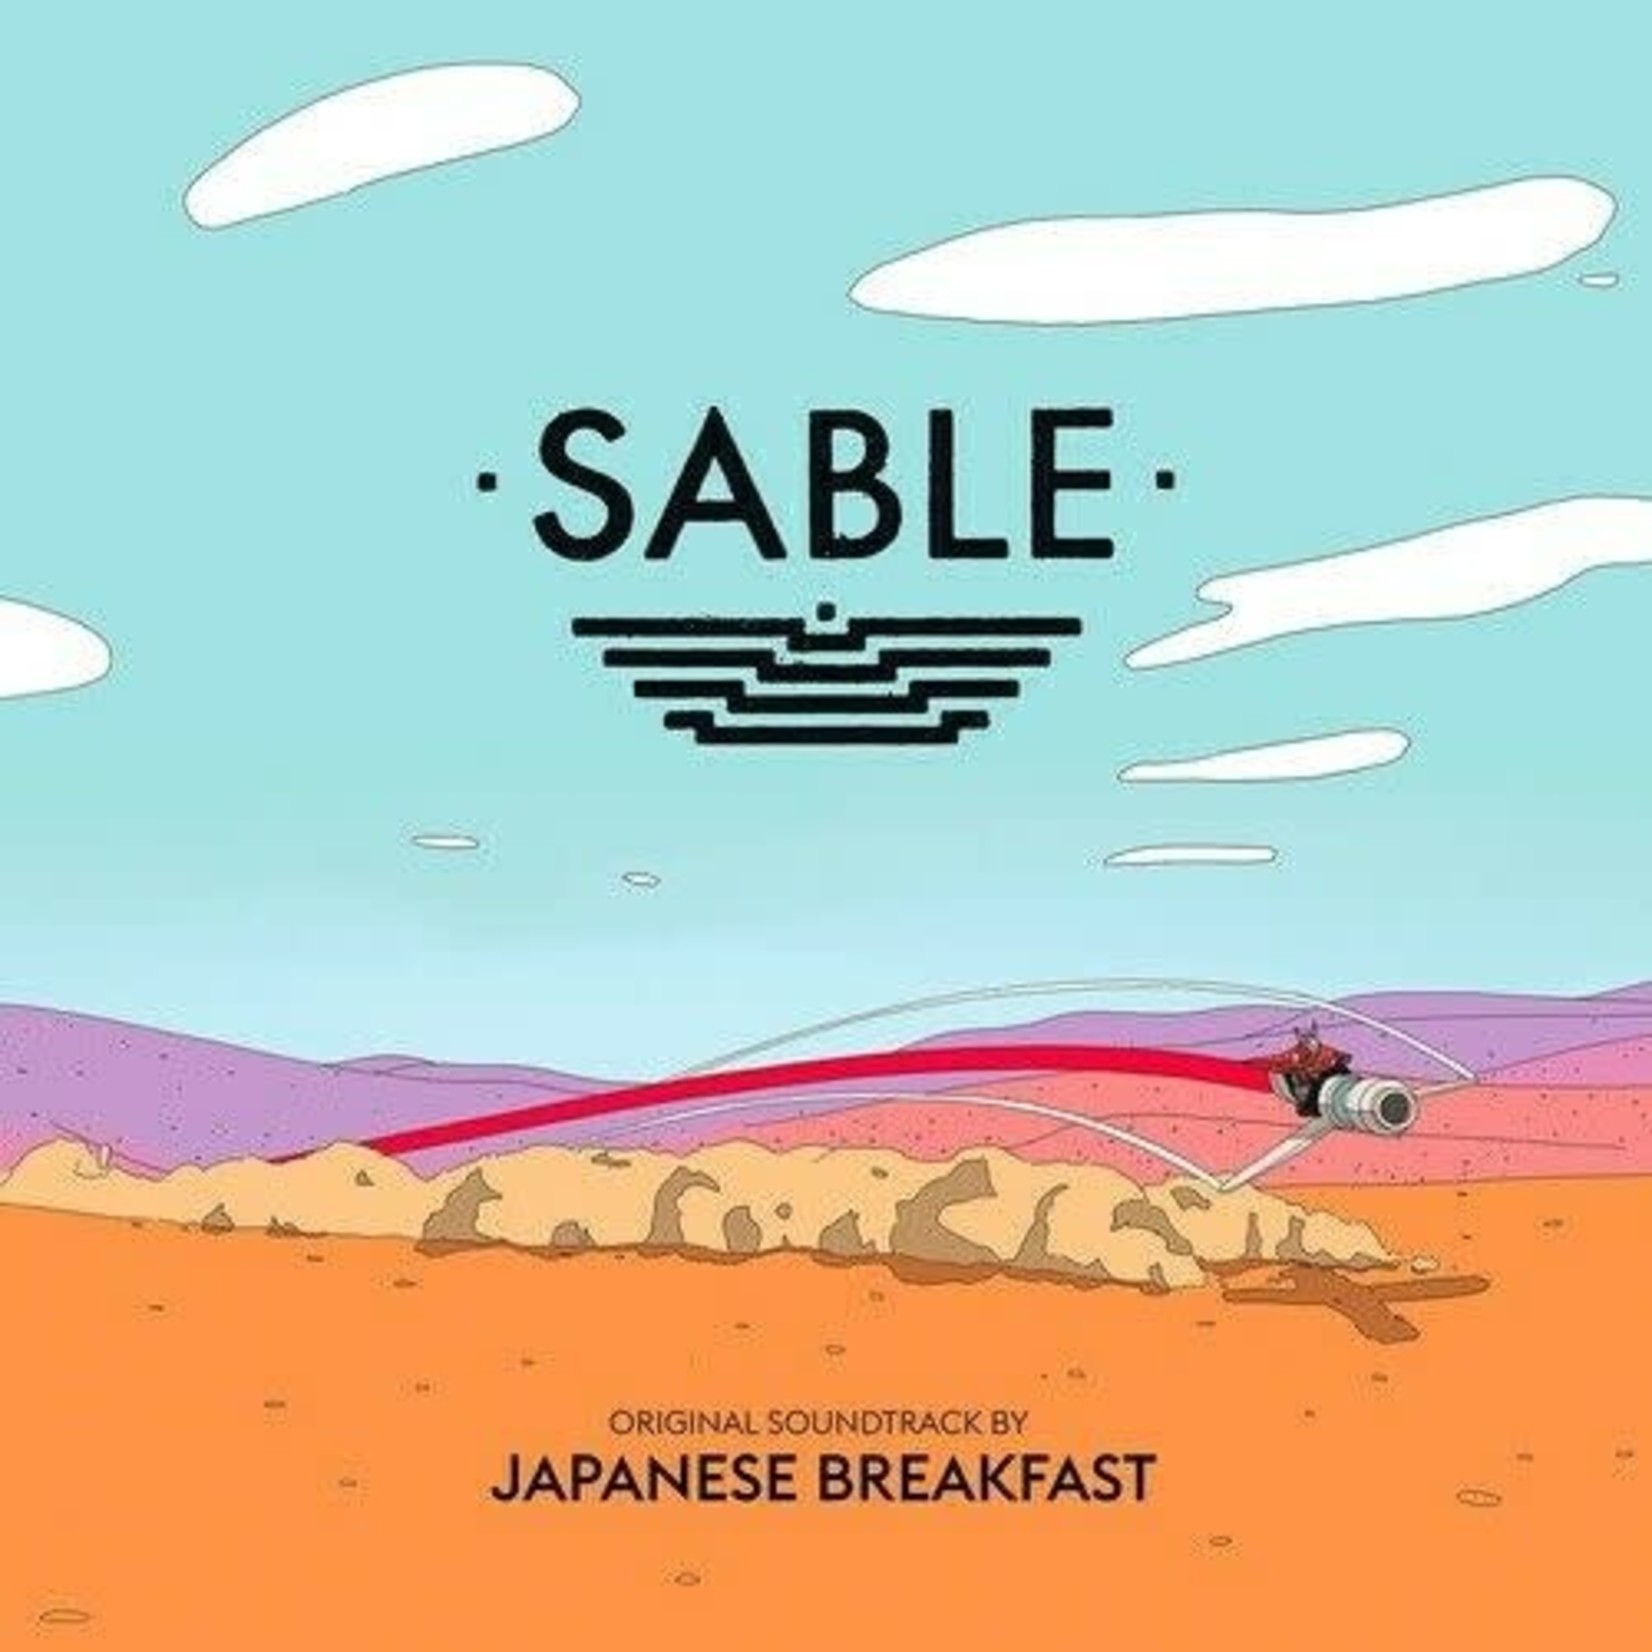 [New] Japanese Breakfast - Sable - Original Video Game Soundtrack (2LP, soundtrack)